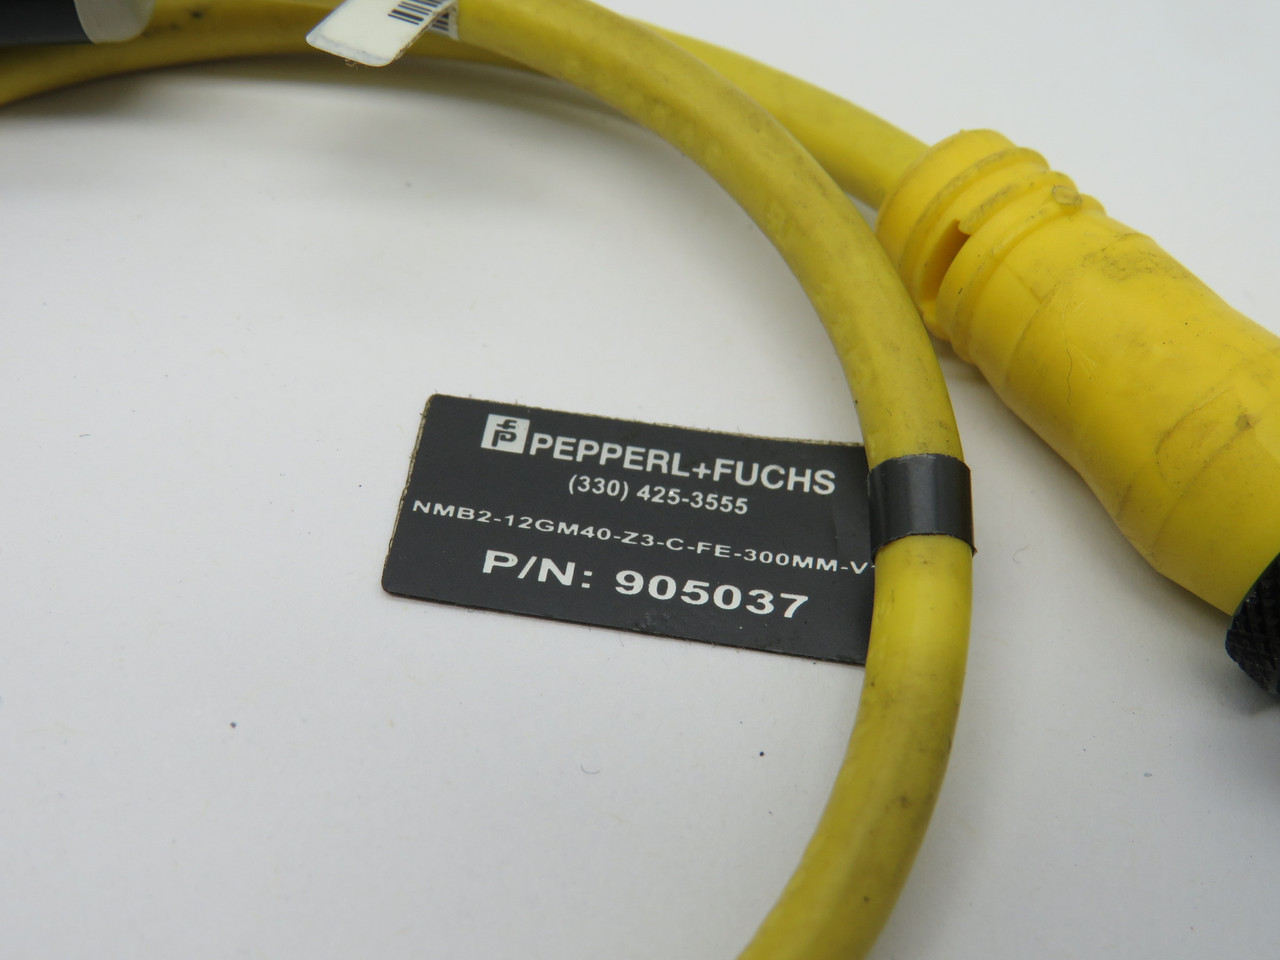 Pepperl+Fuchs NMB2-12GM40-Z3-C-FE-300MM-V1 Inductive Proximity Sensor USED